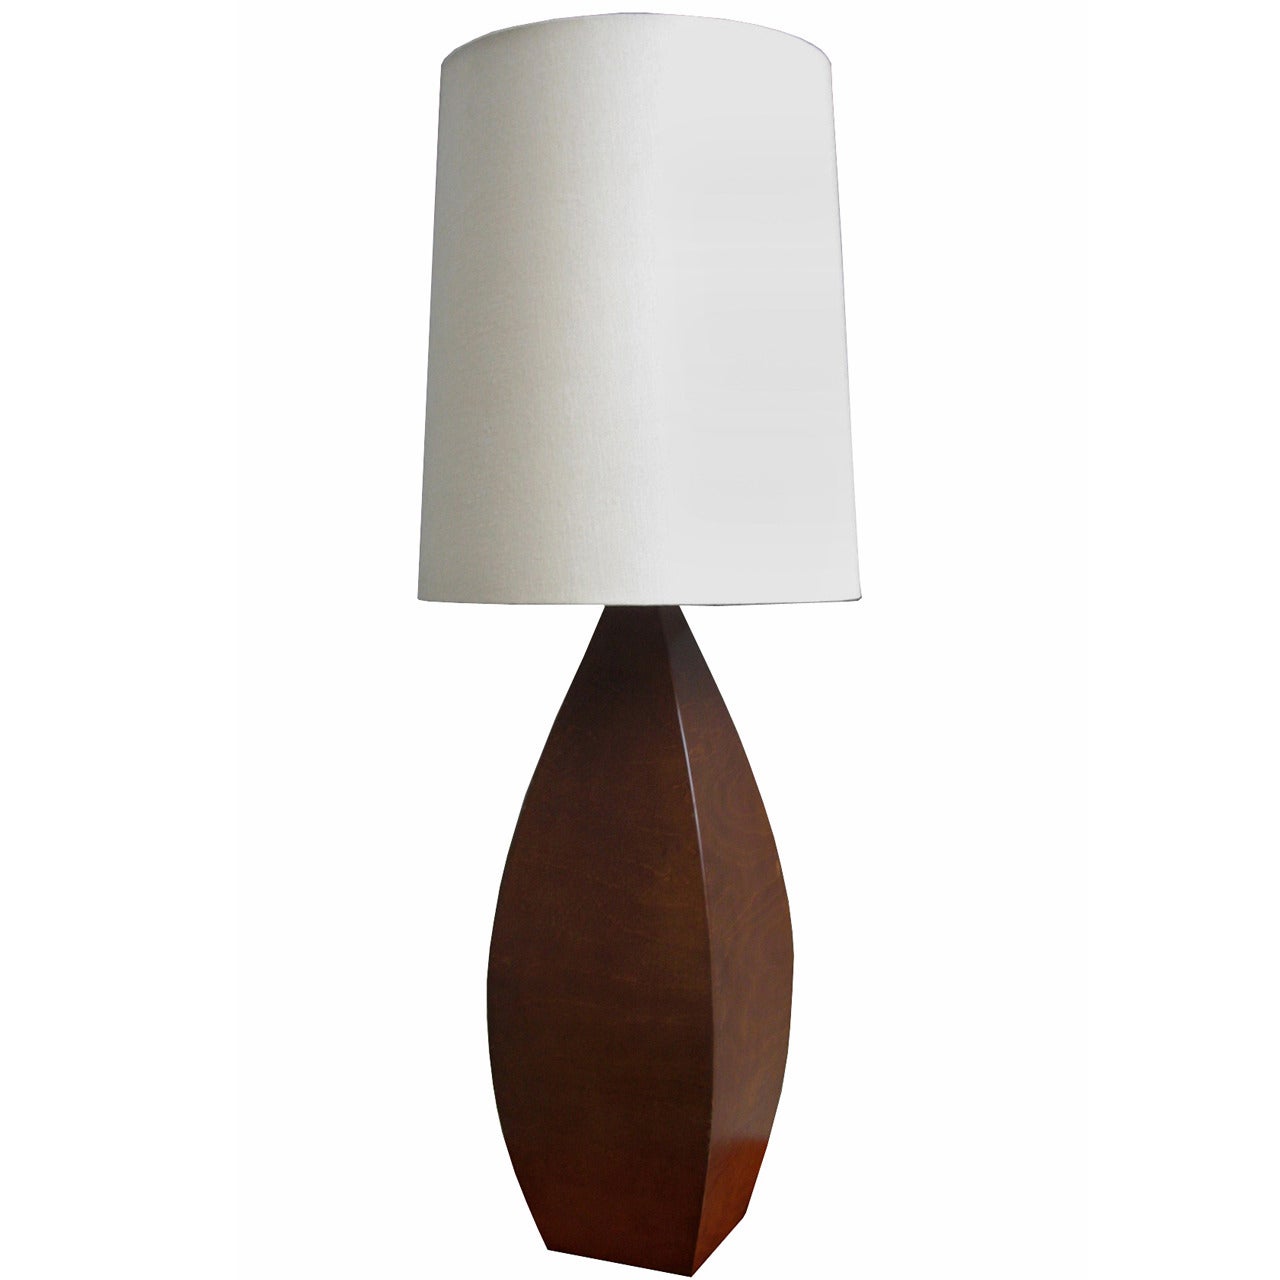 Italian Modernist Table Lamp For Sale